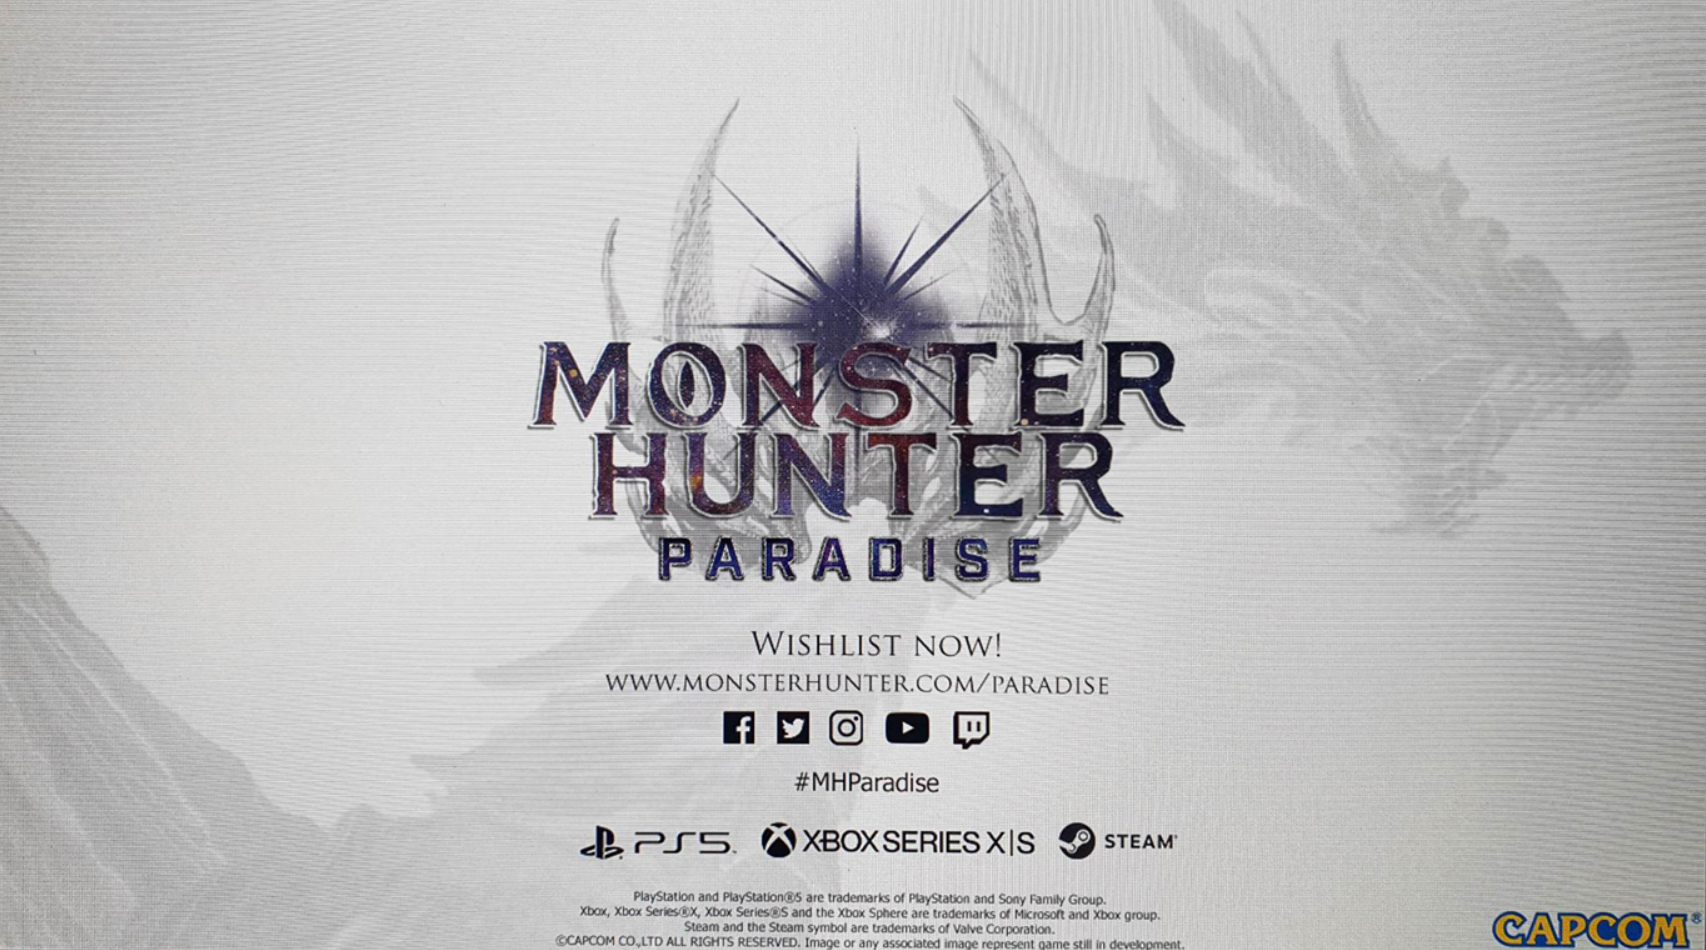 Monster hunter paradise battle pass